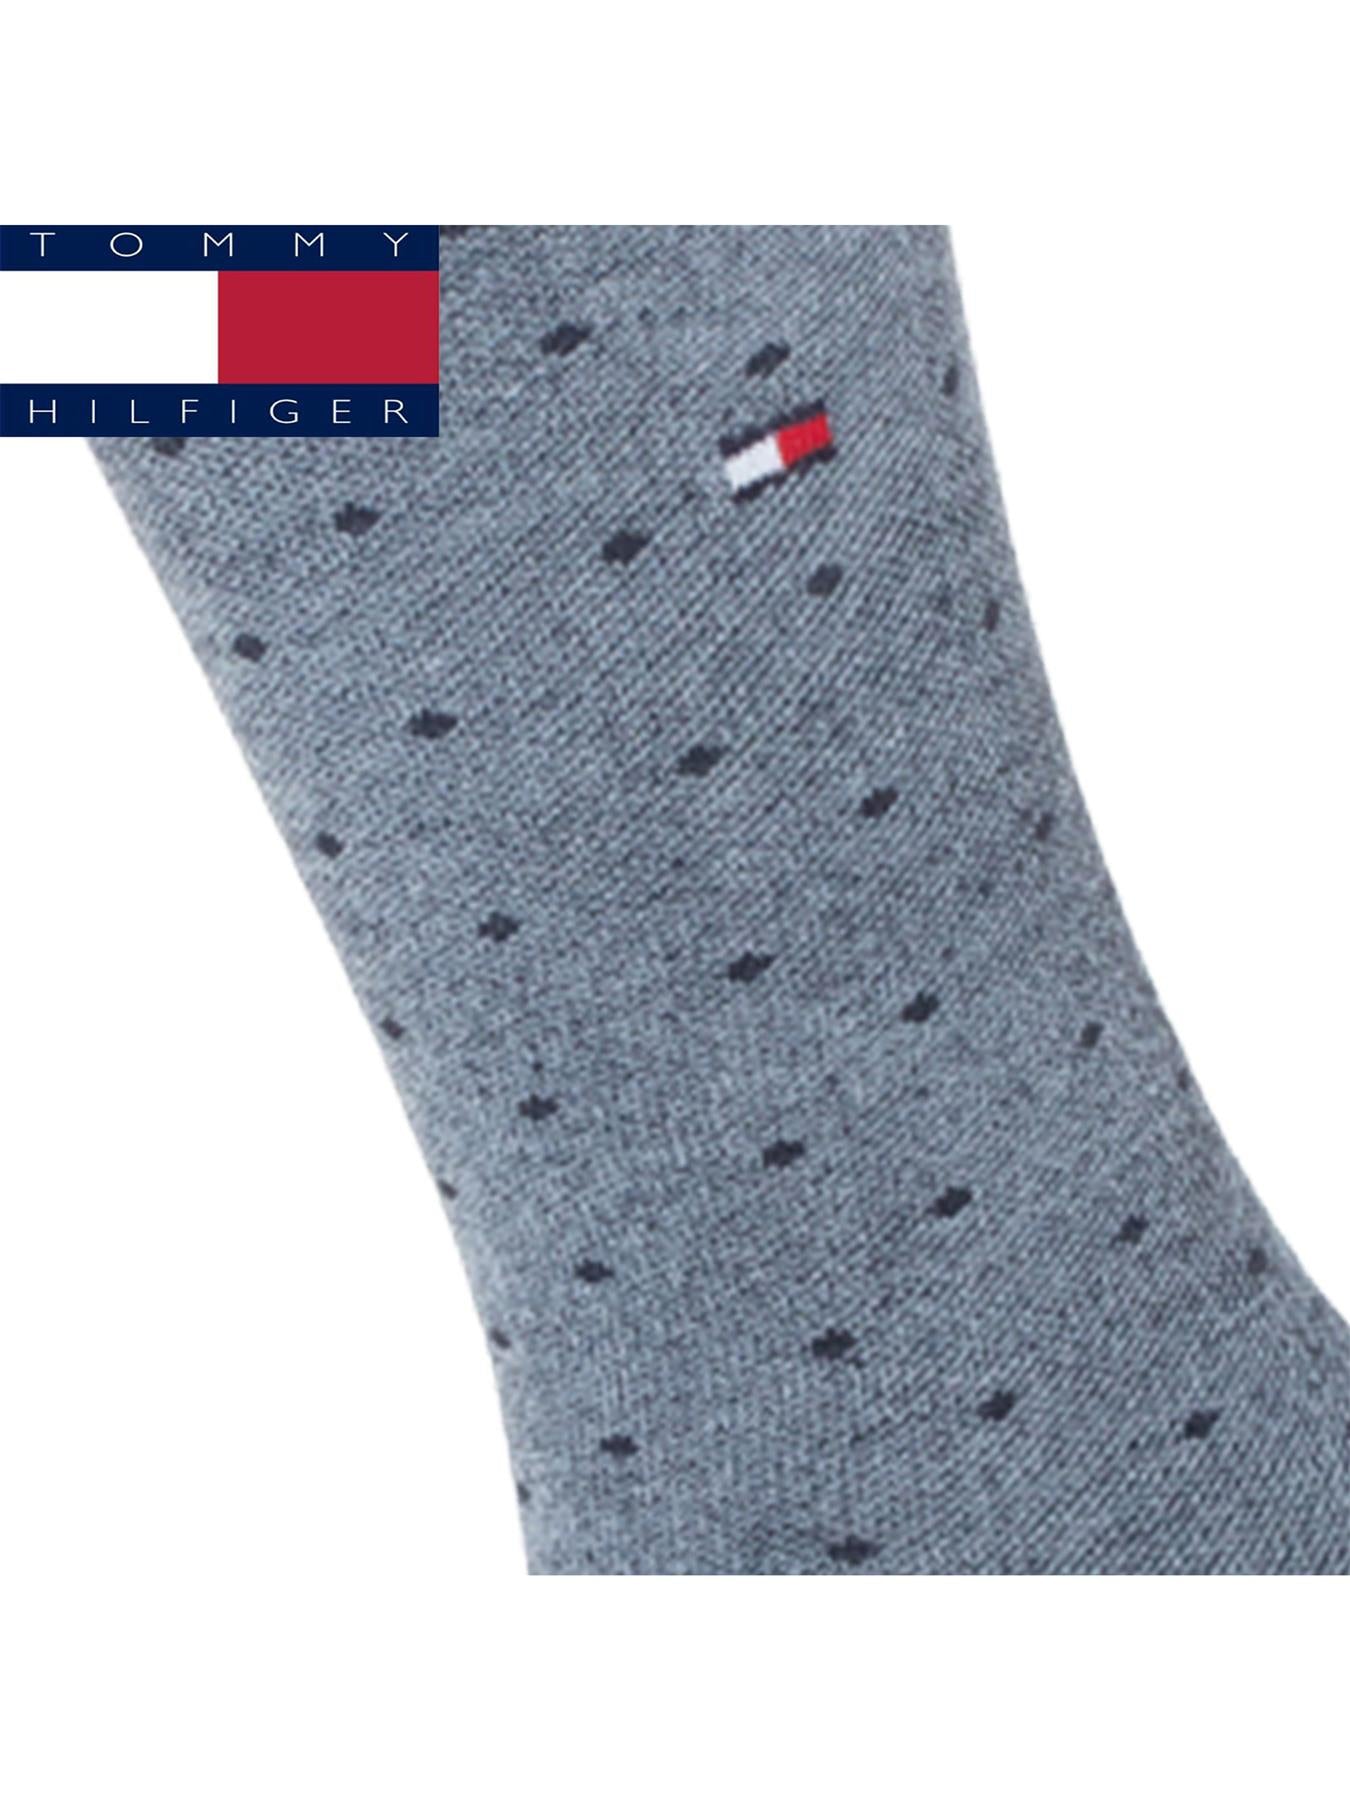 TH TIN SOCKS Tommy Hilfiger | Mens Designer Gift Set Socks TOMMY HILFIGER RAWDENIM